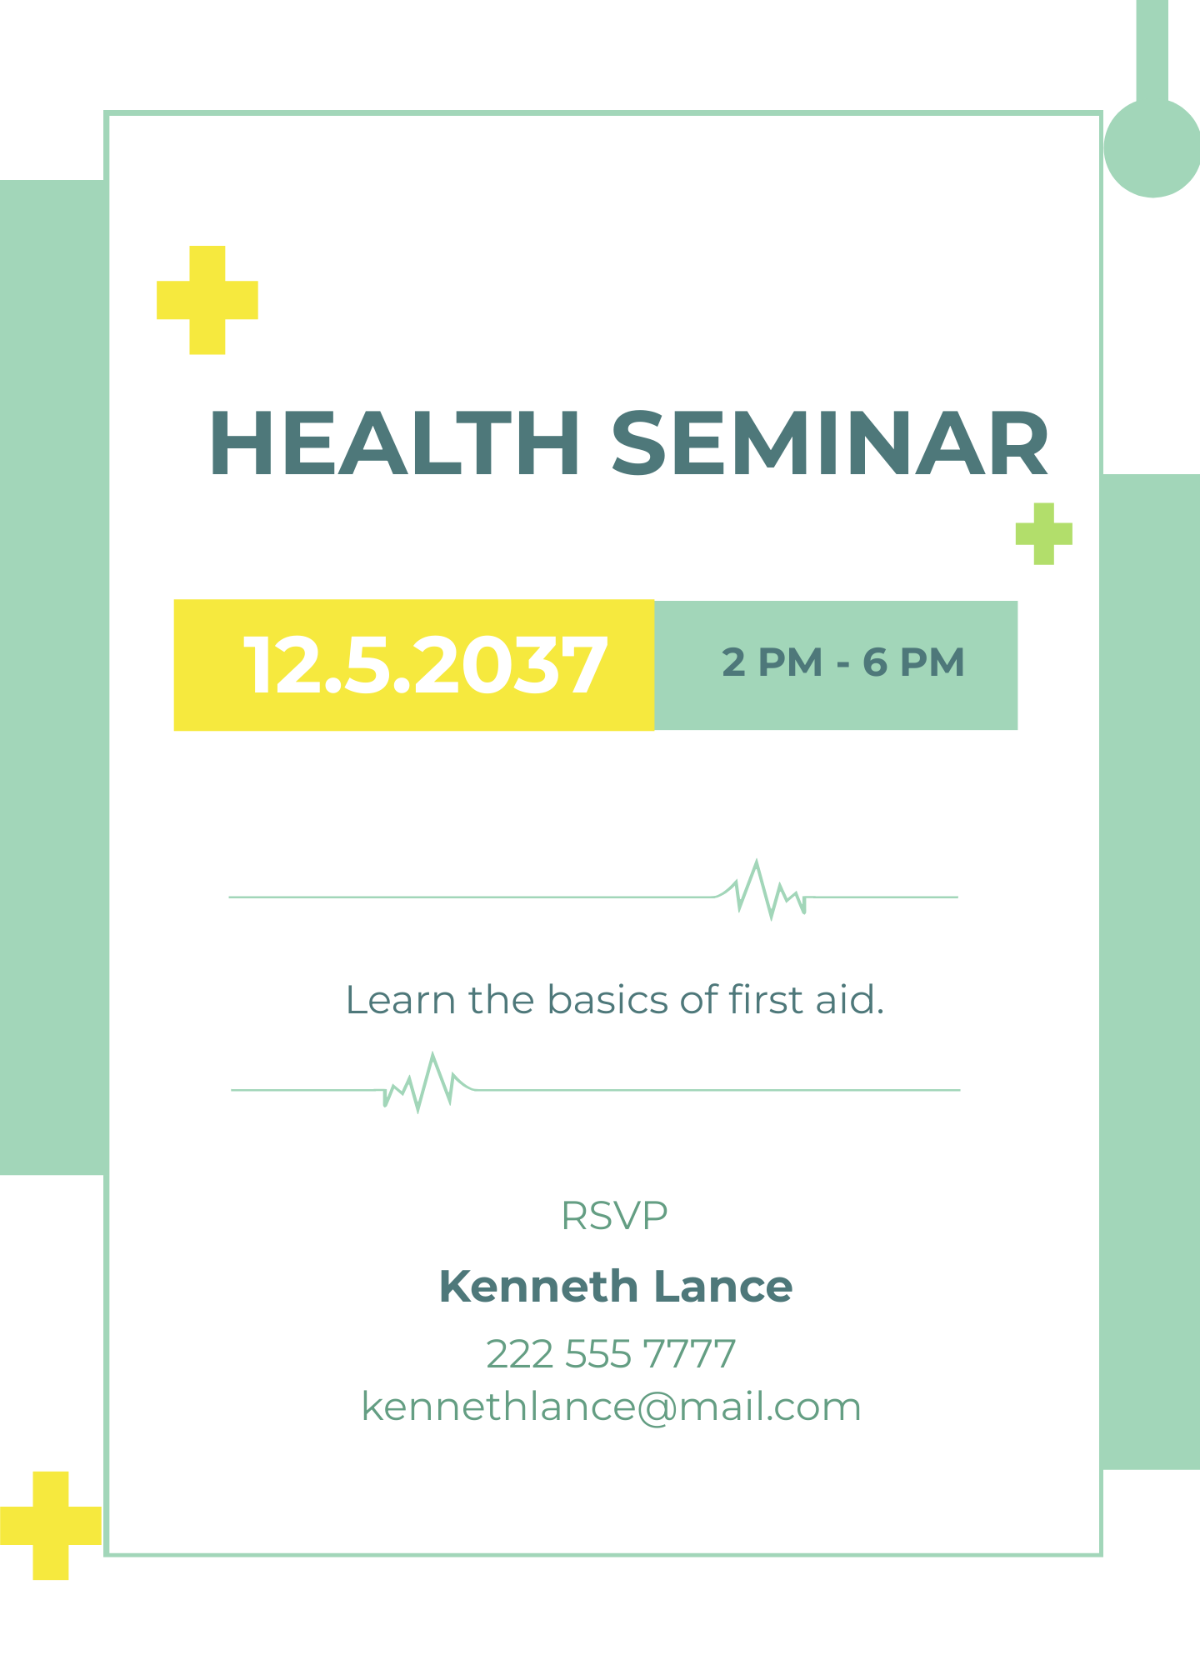 Health Seminar Invitation